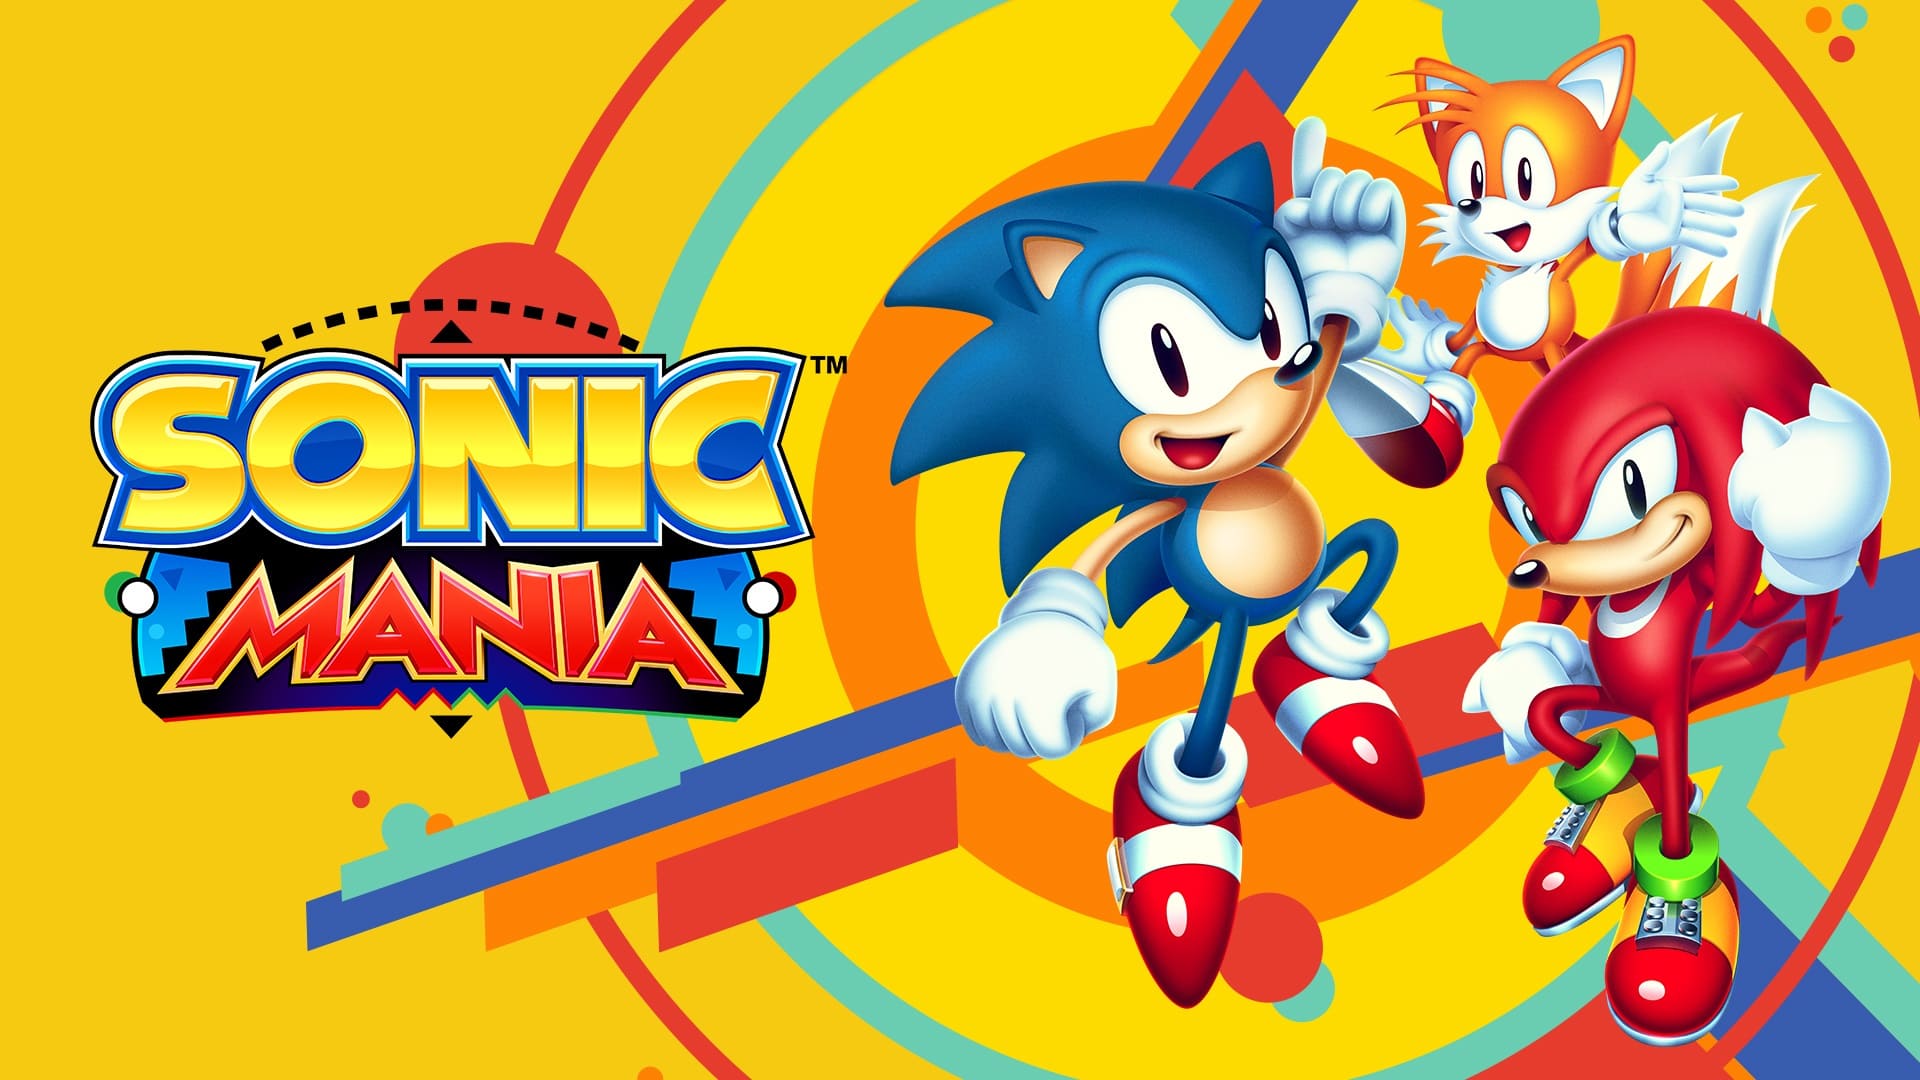 Kali ini EGS berikan Free Games Sonic Mania & Horizon Chase Turbo